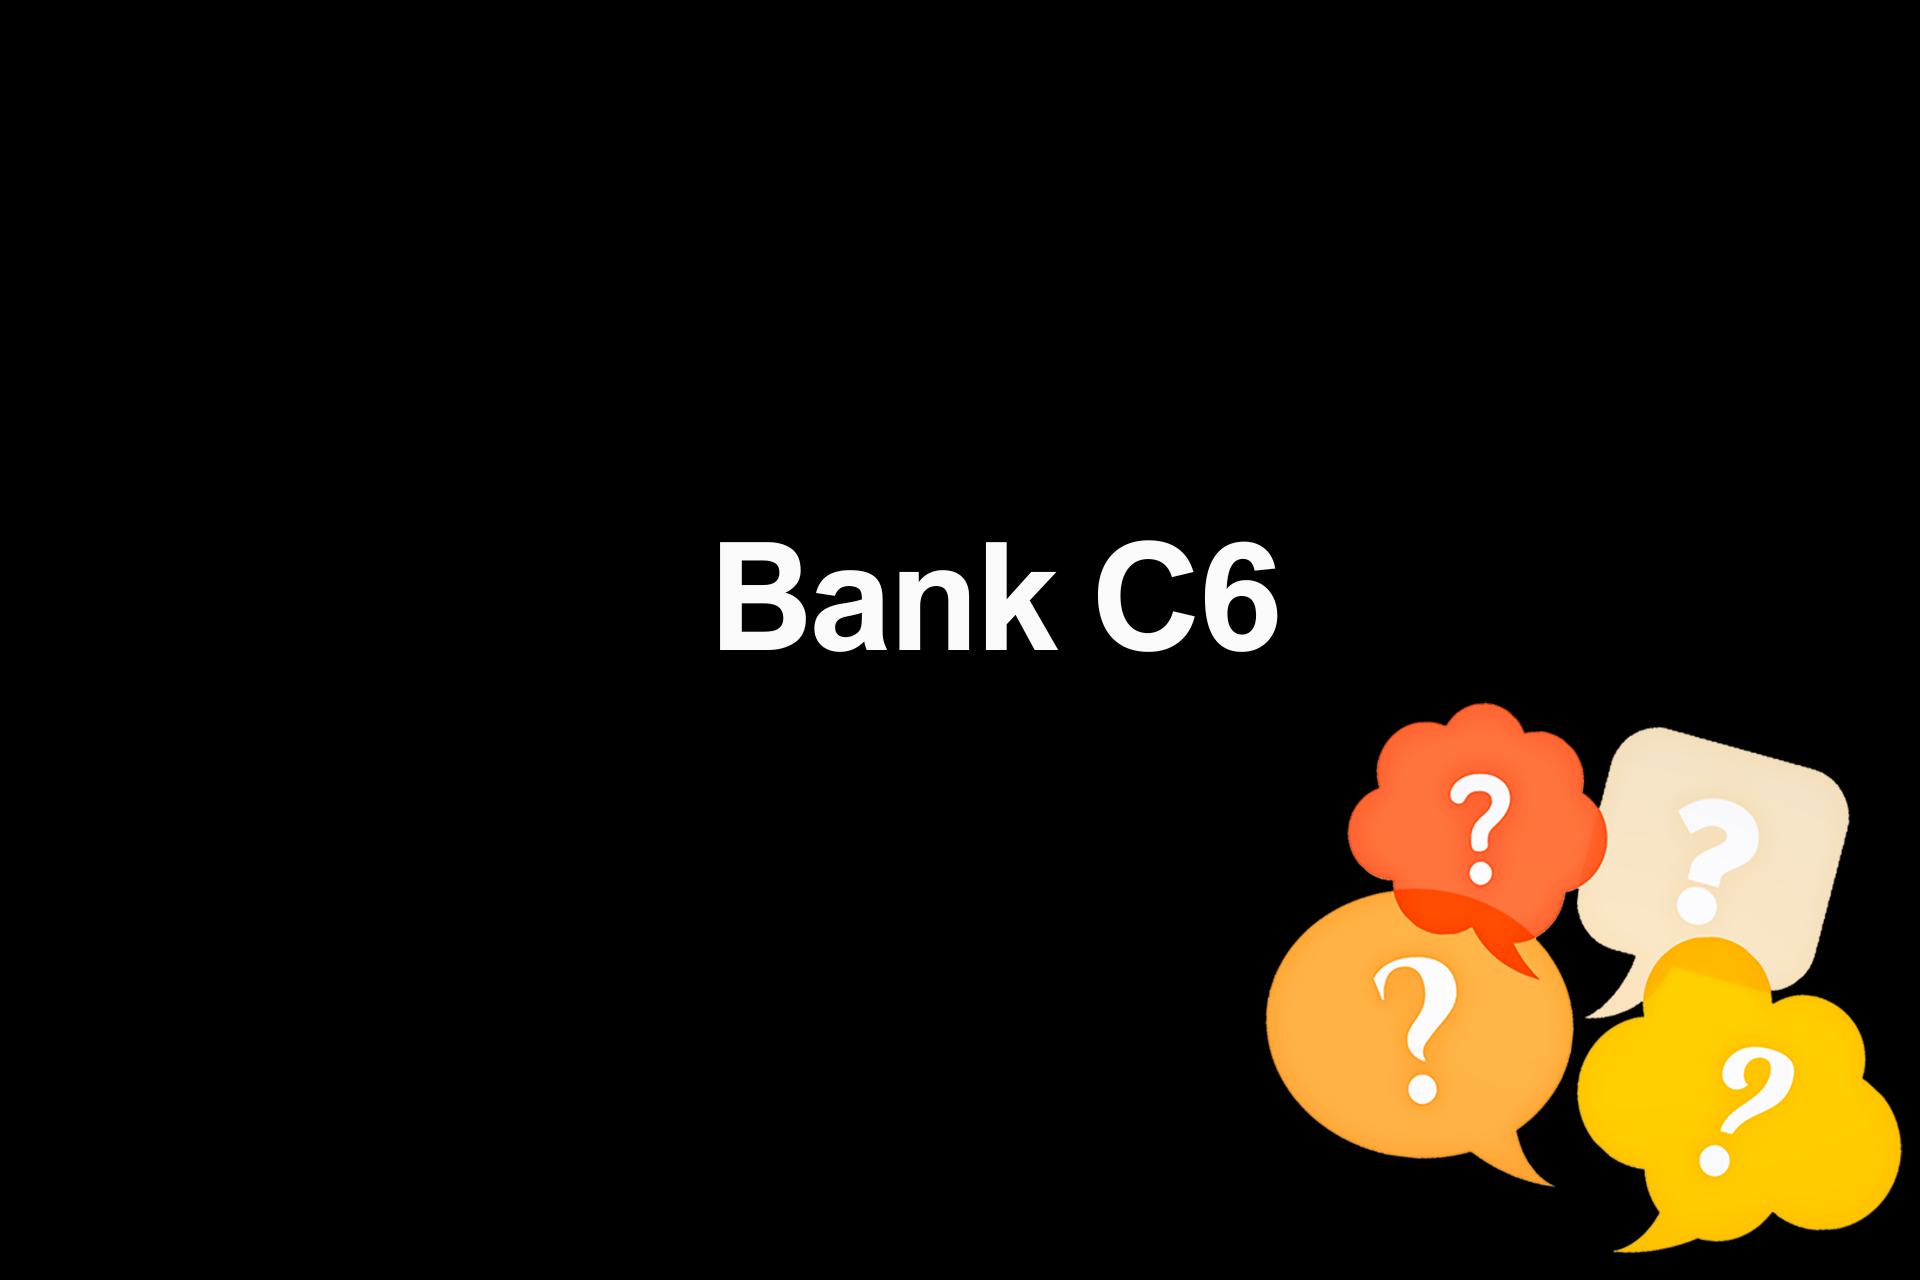 Bank C6?